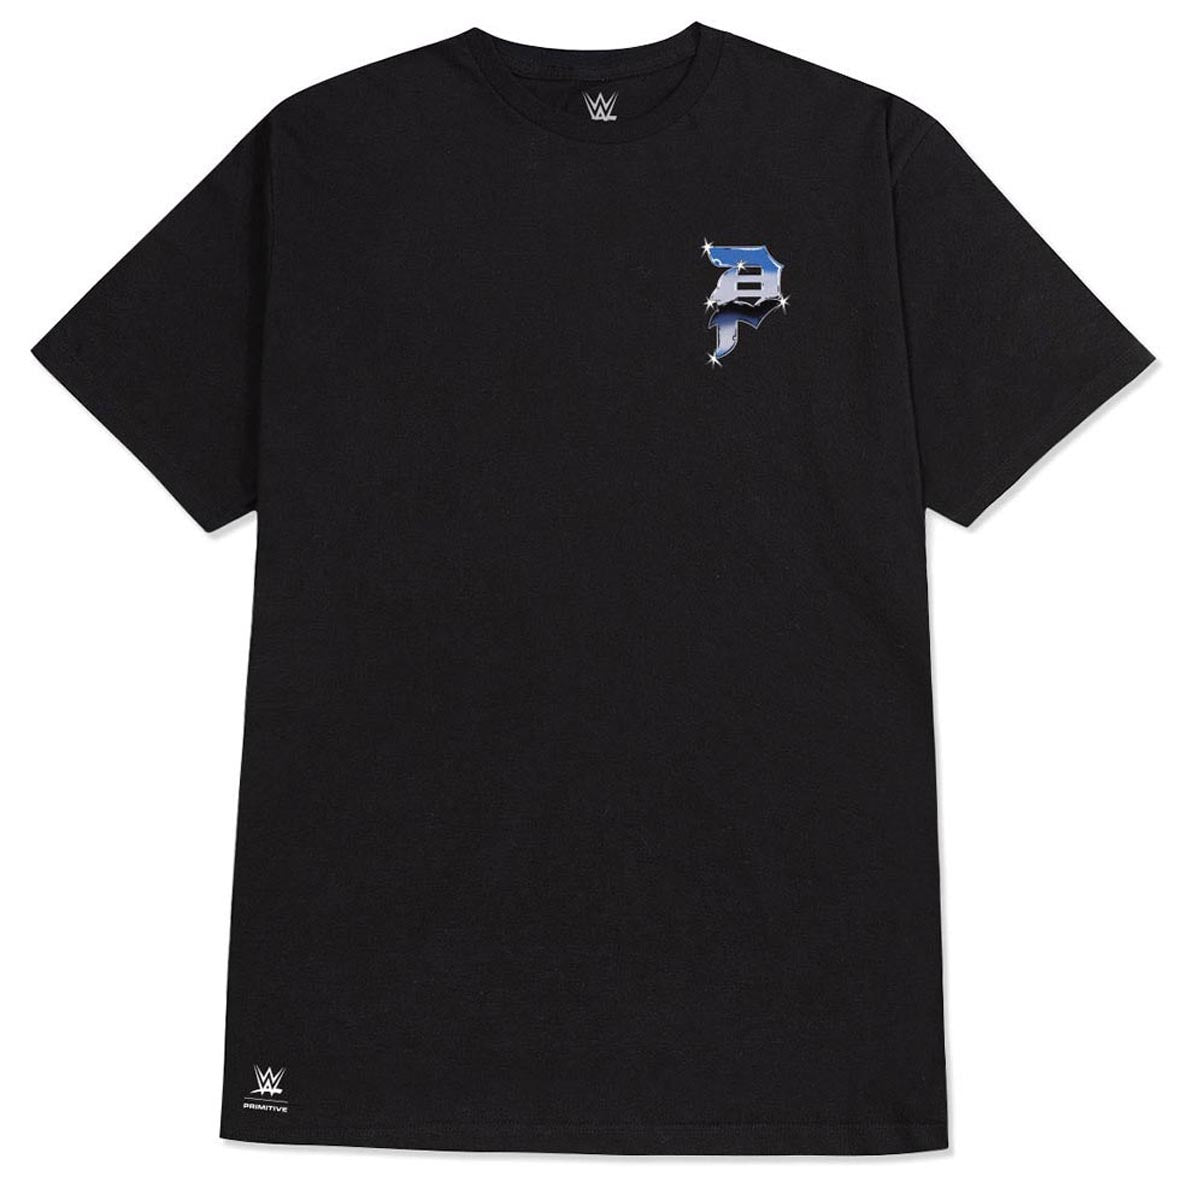 Primitive x WWE Cold One T-Shirt - Black image 2